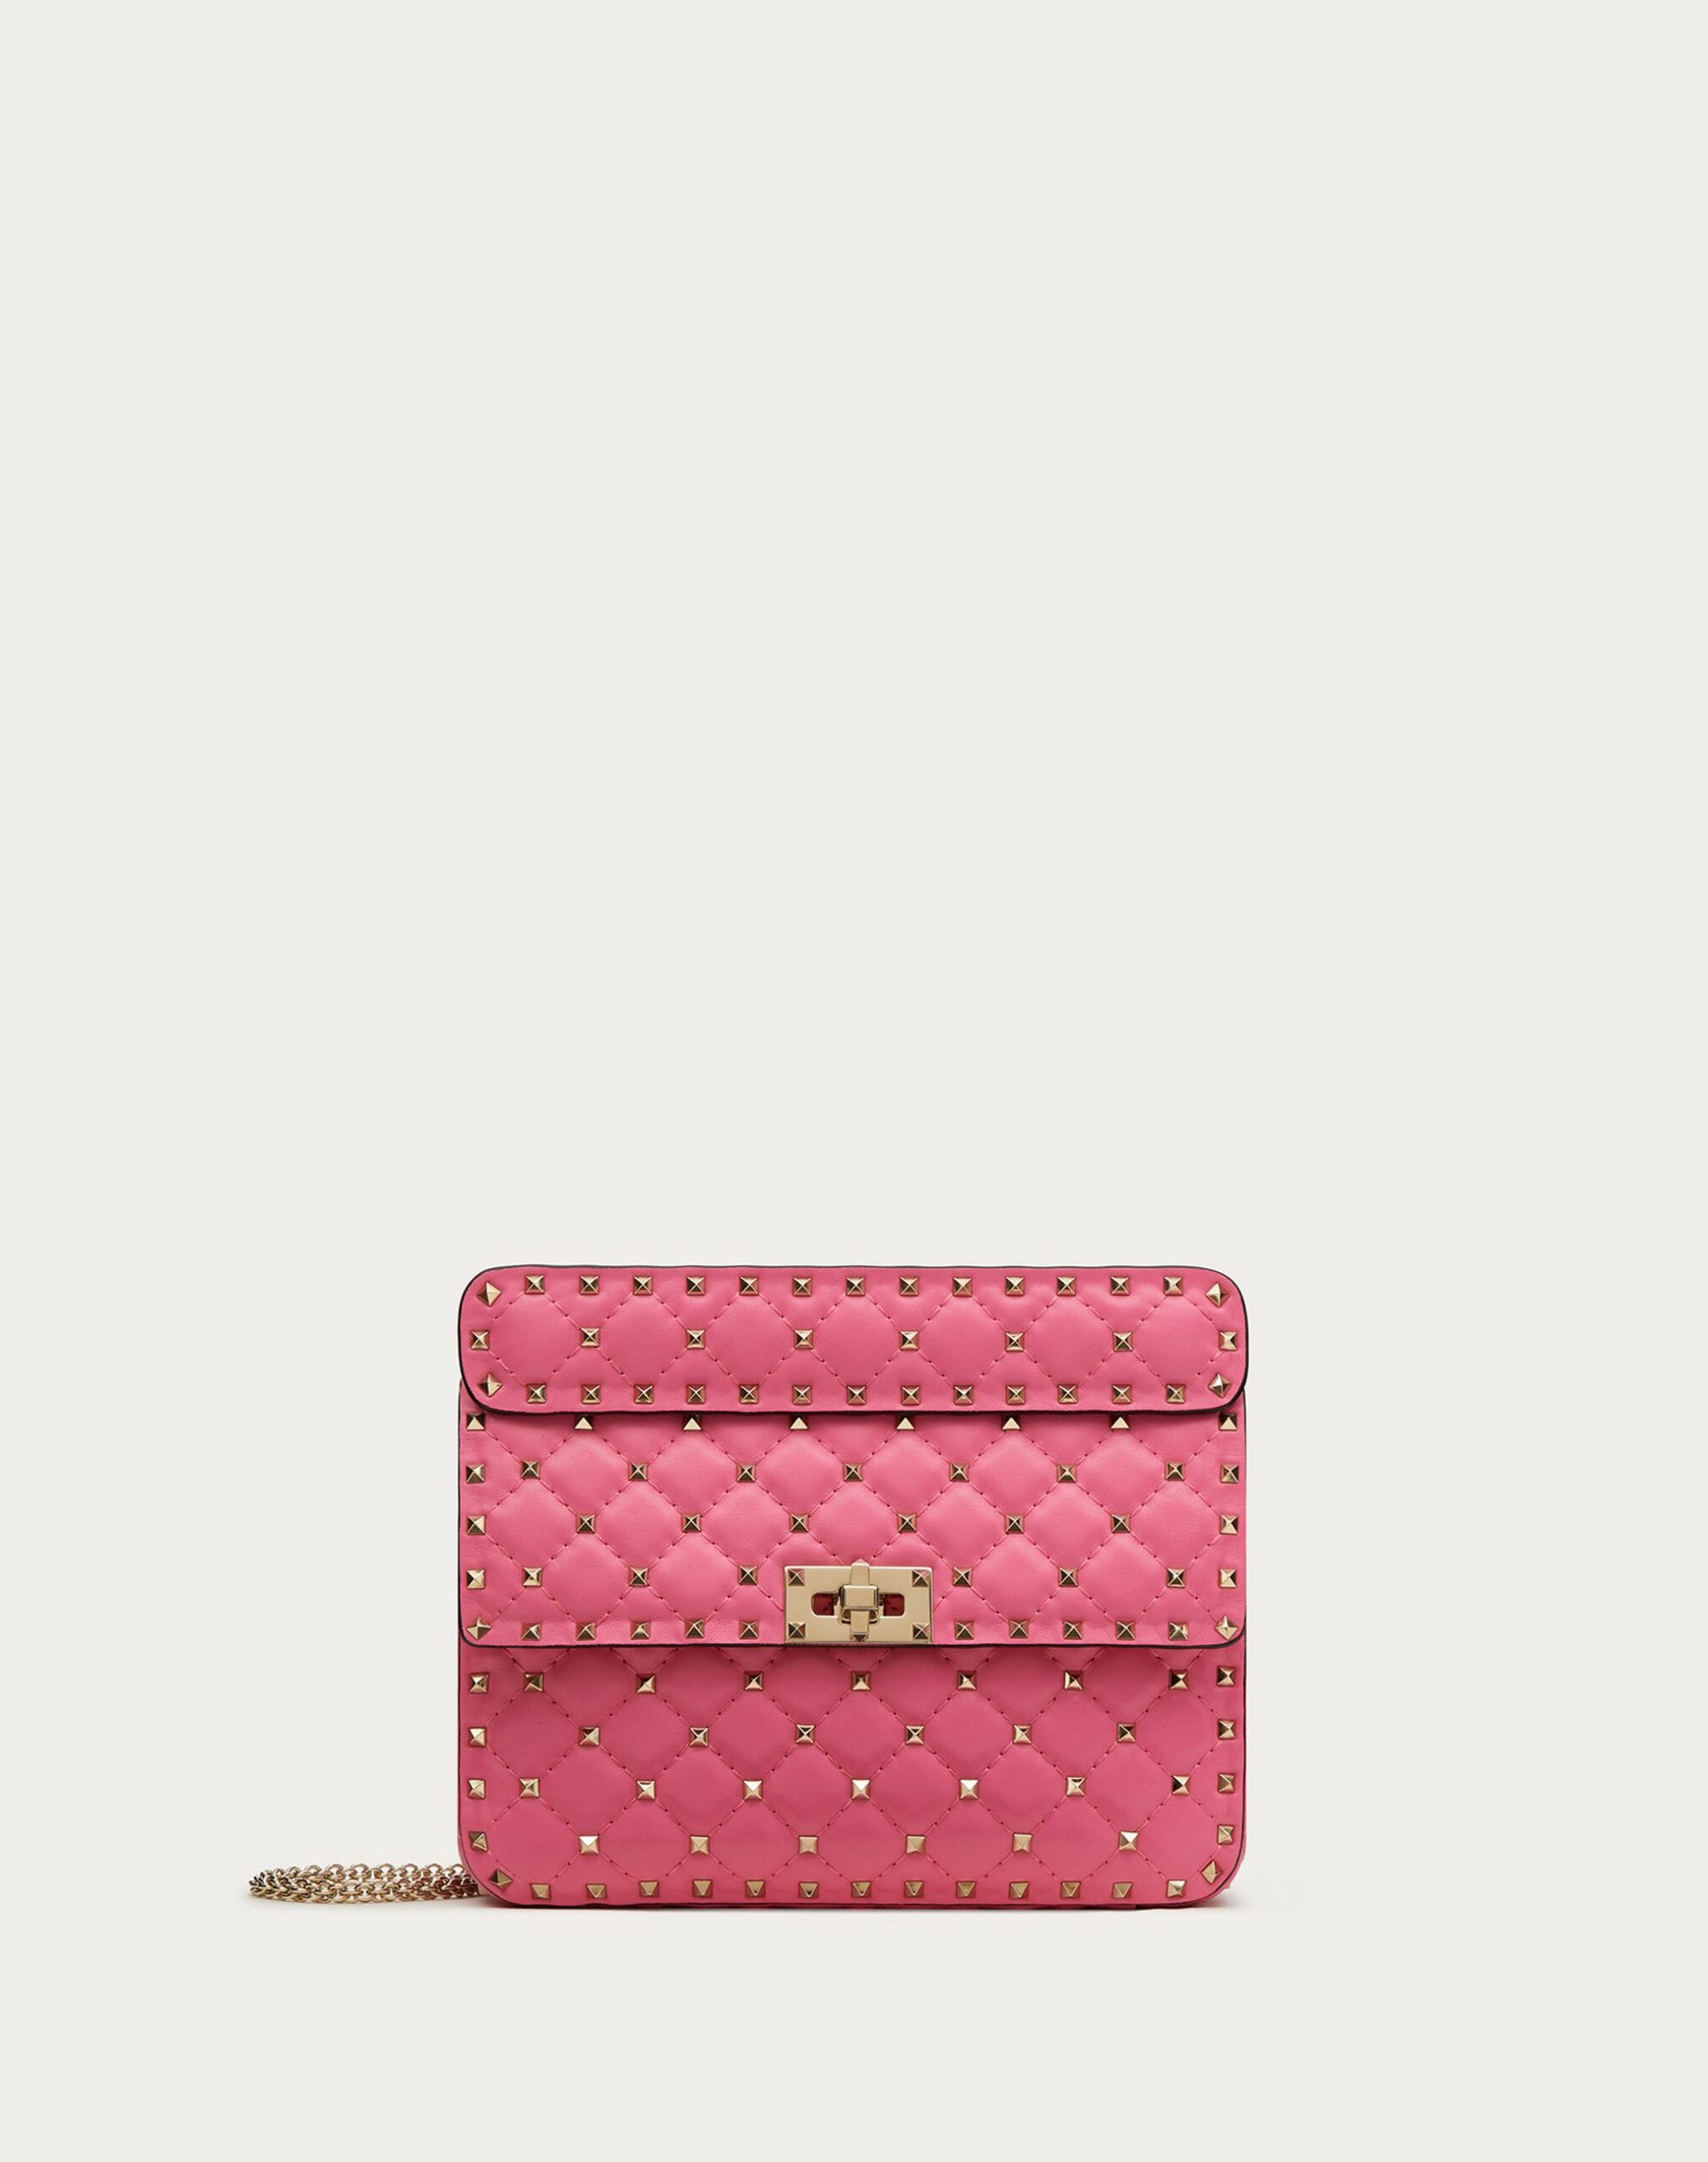 Valentino Medium Rockstud Spike Nappa Leather Bag Pink (XW2B0122NAPHW4)